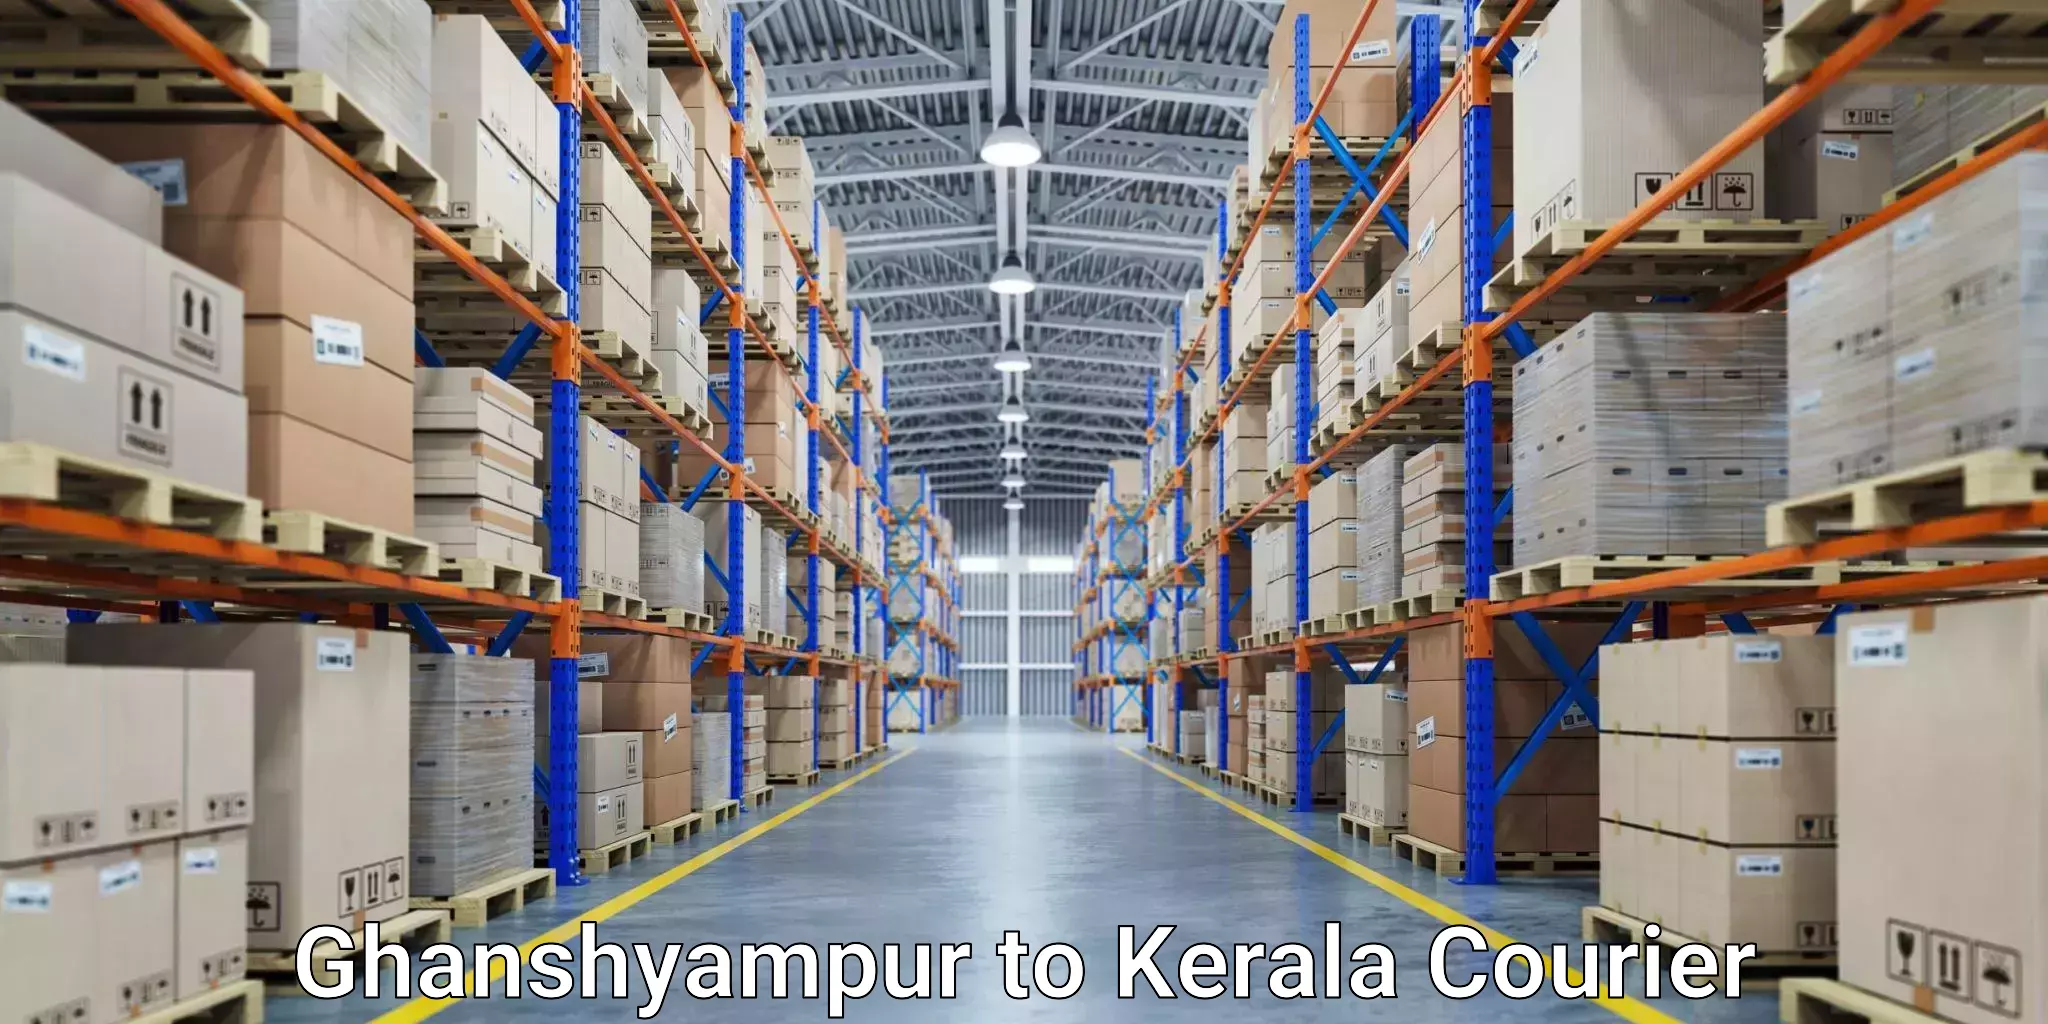 On-demand delivery Ghanshyampur to Cochin Port Kochi